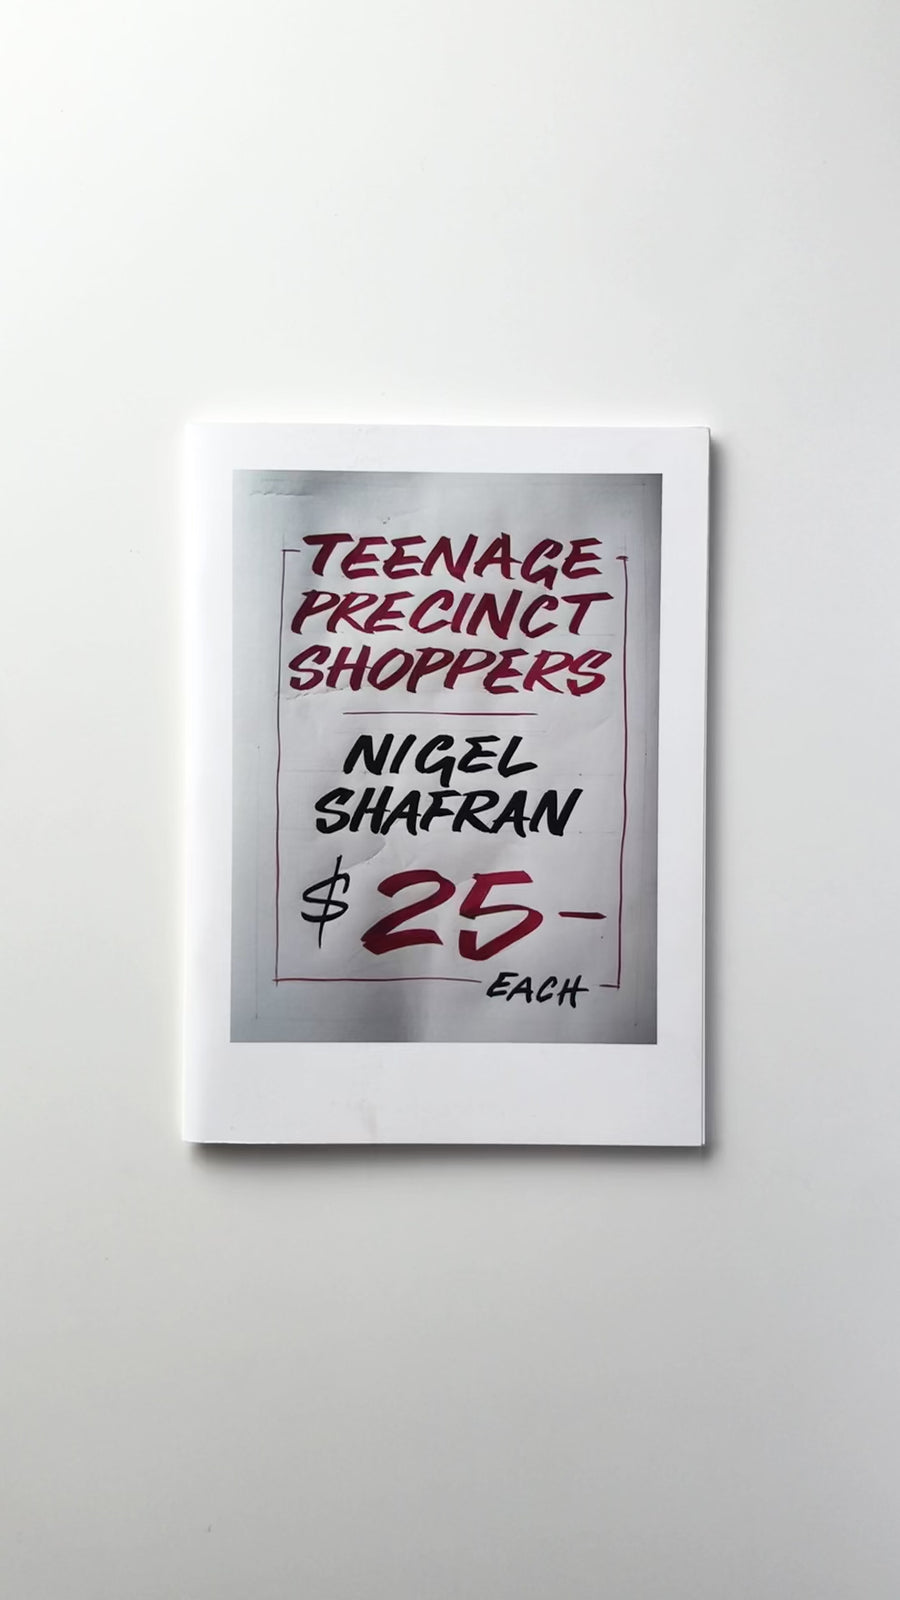 (Signed) Teenage Precinct Shoppers